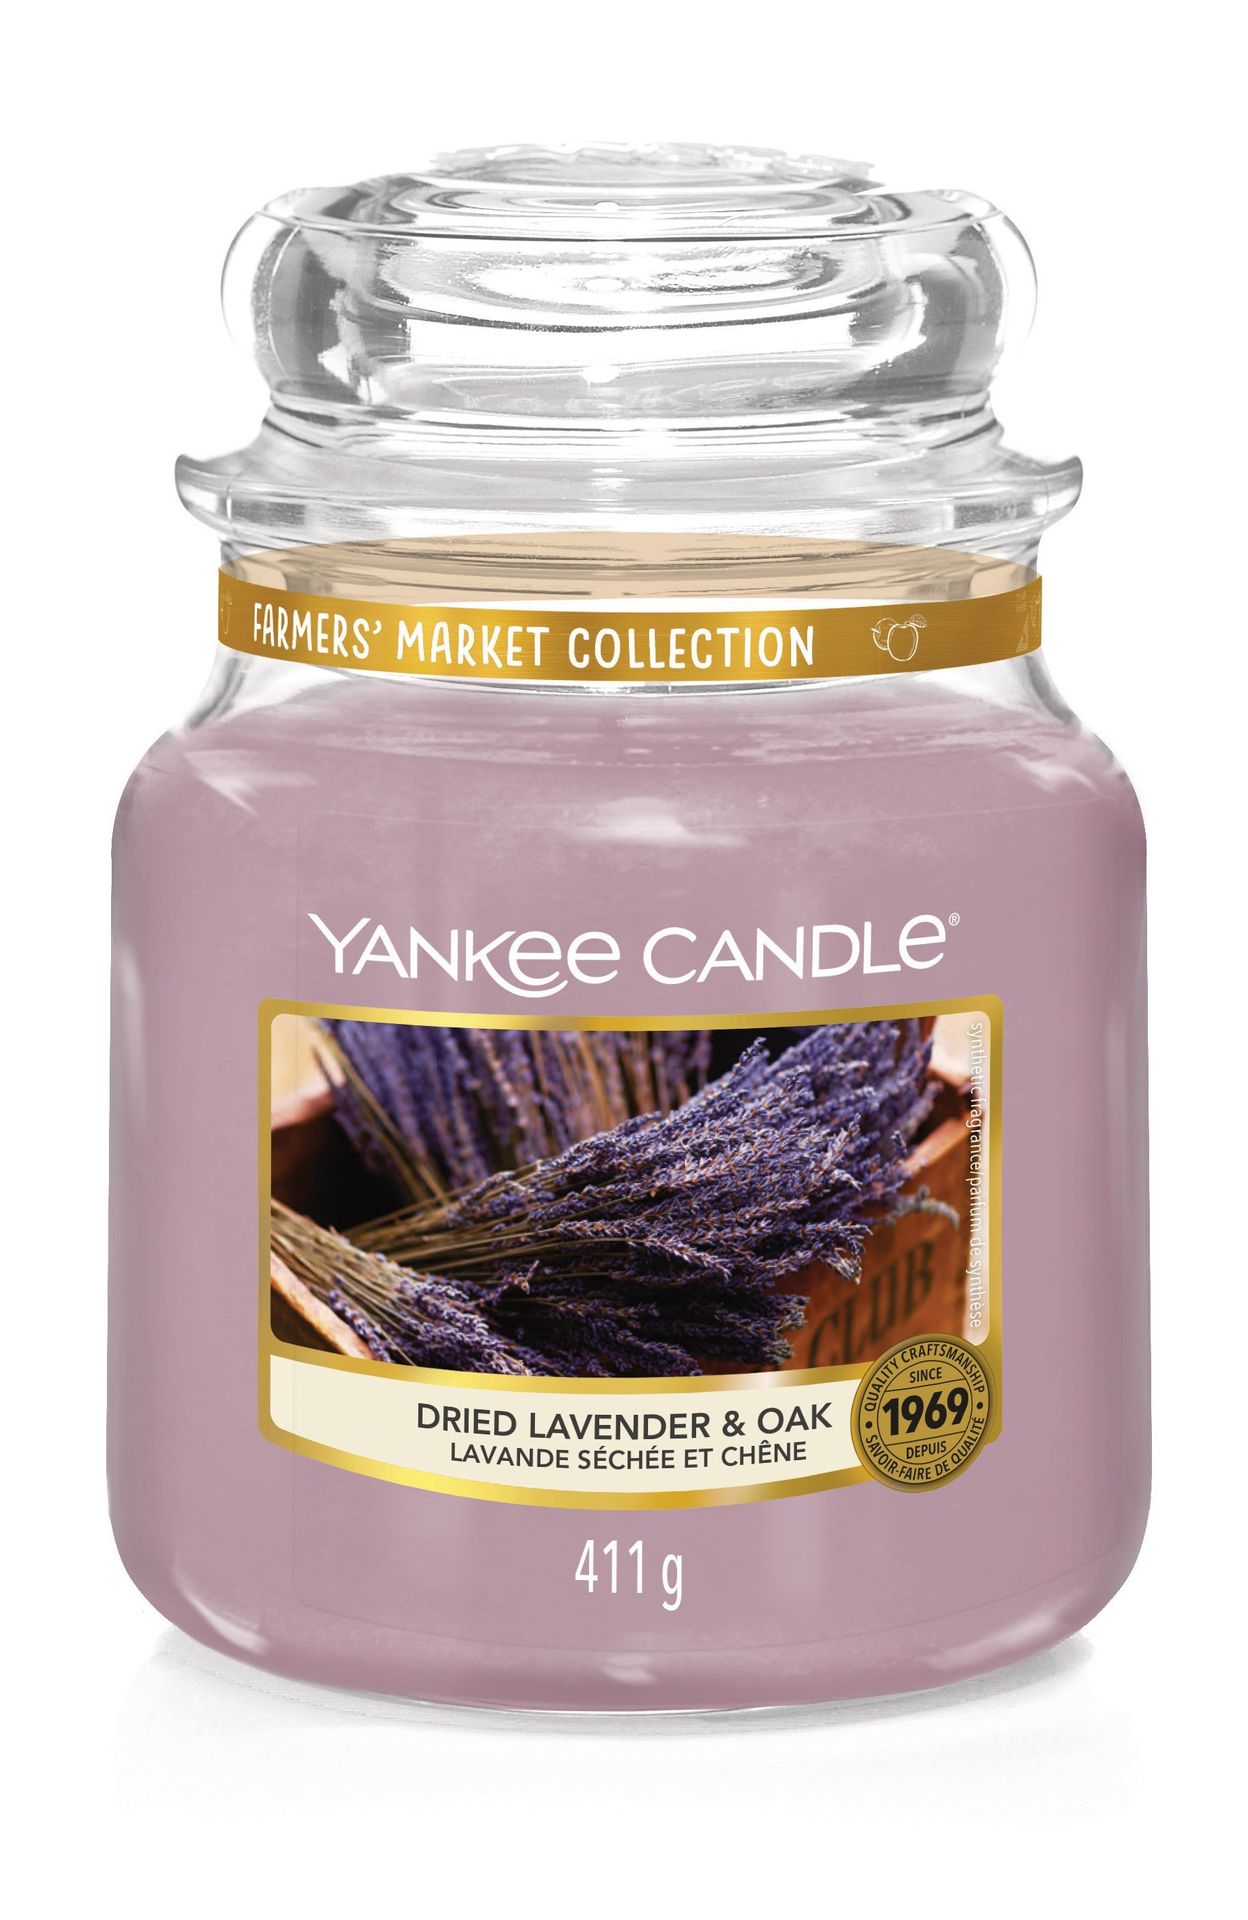 Yankee Candle Dried Lavender & Oak słoik średni 411g 1623468E